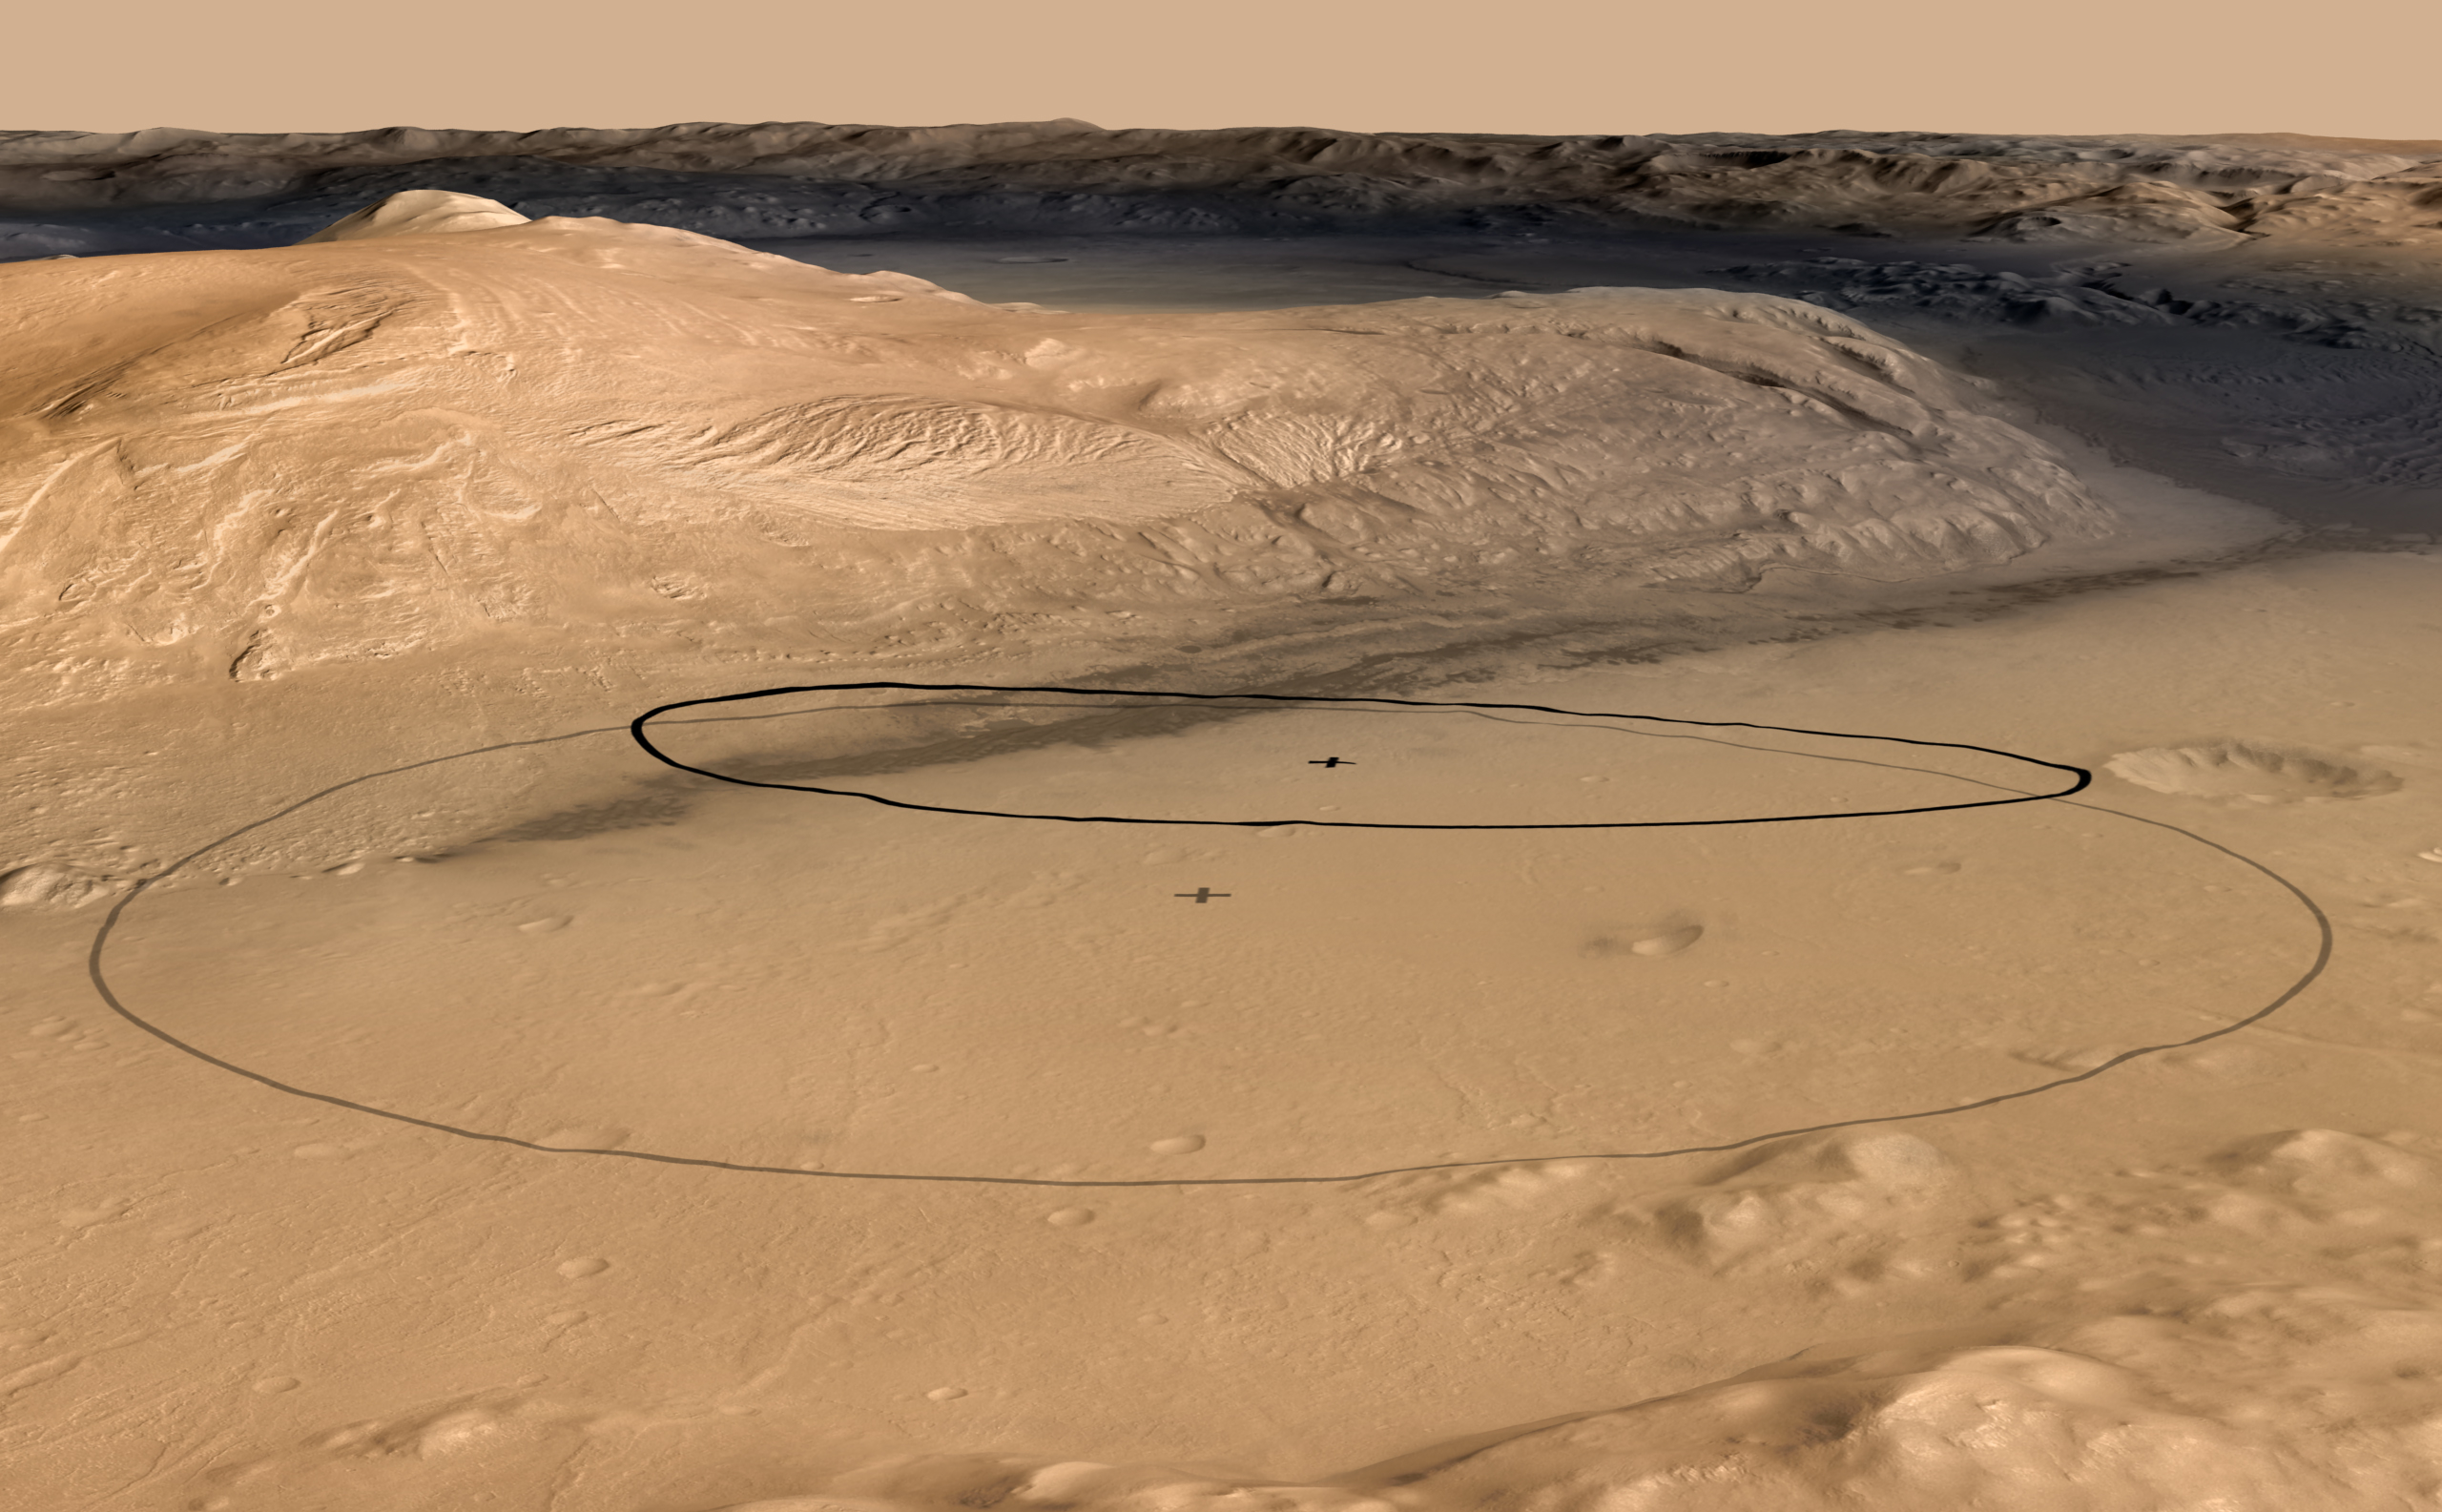 Revised Landing Target for Mars Rover Curiosity